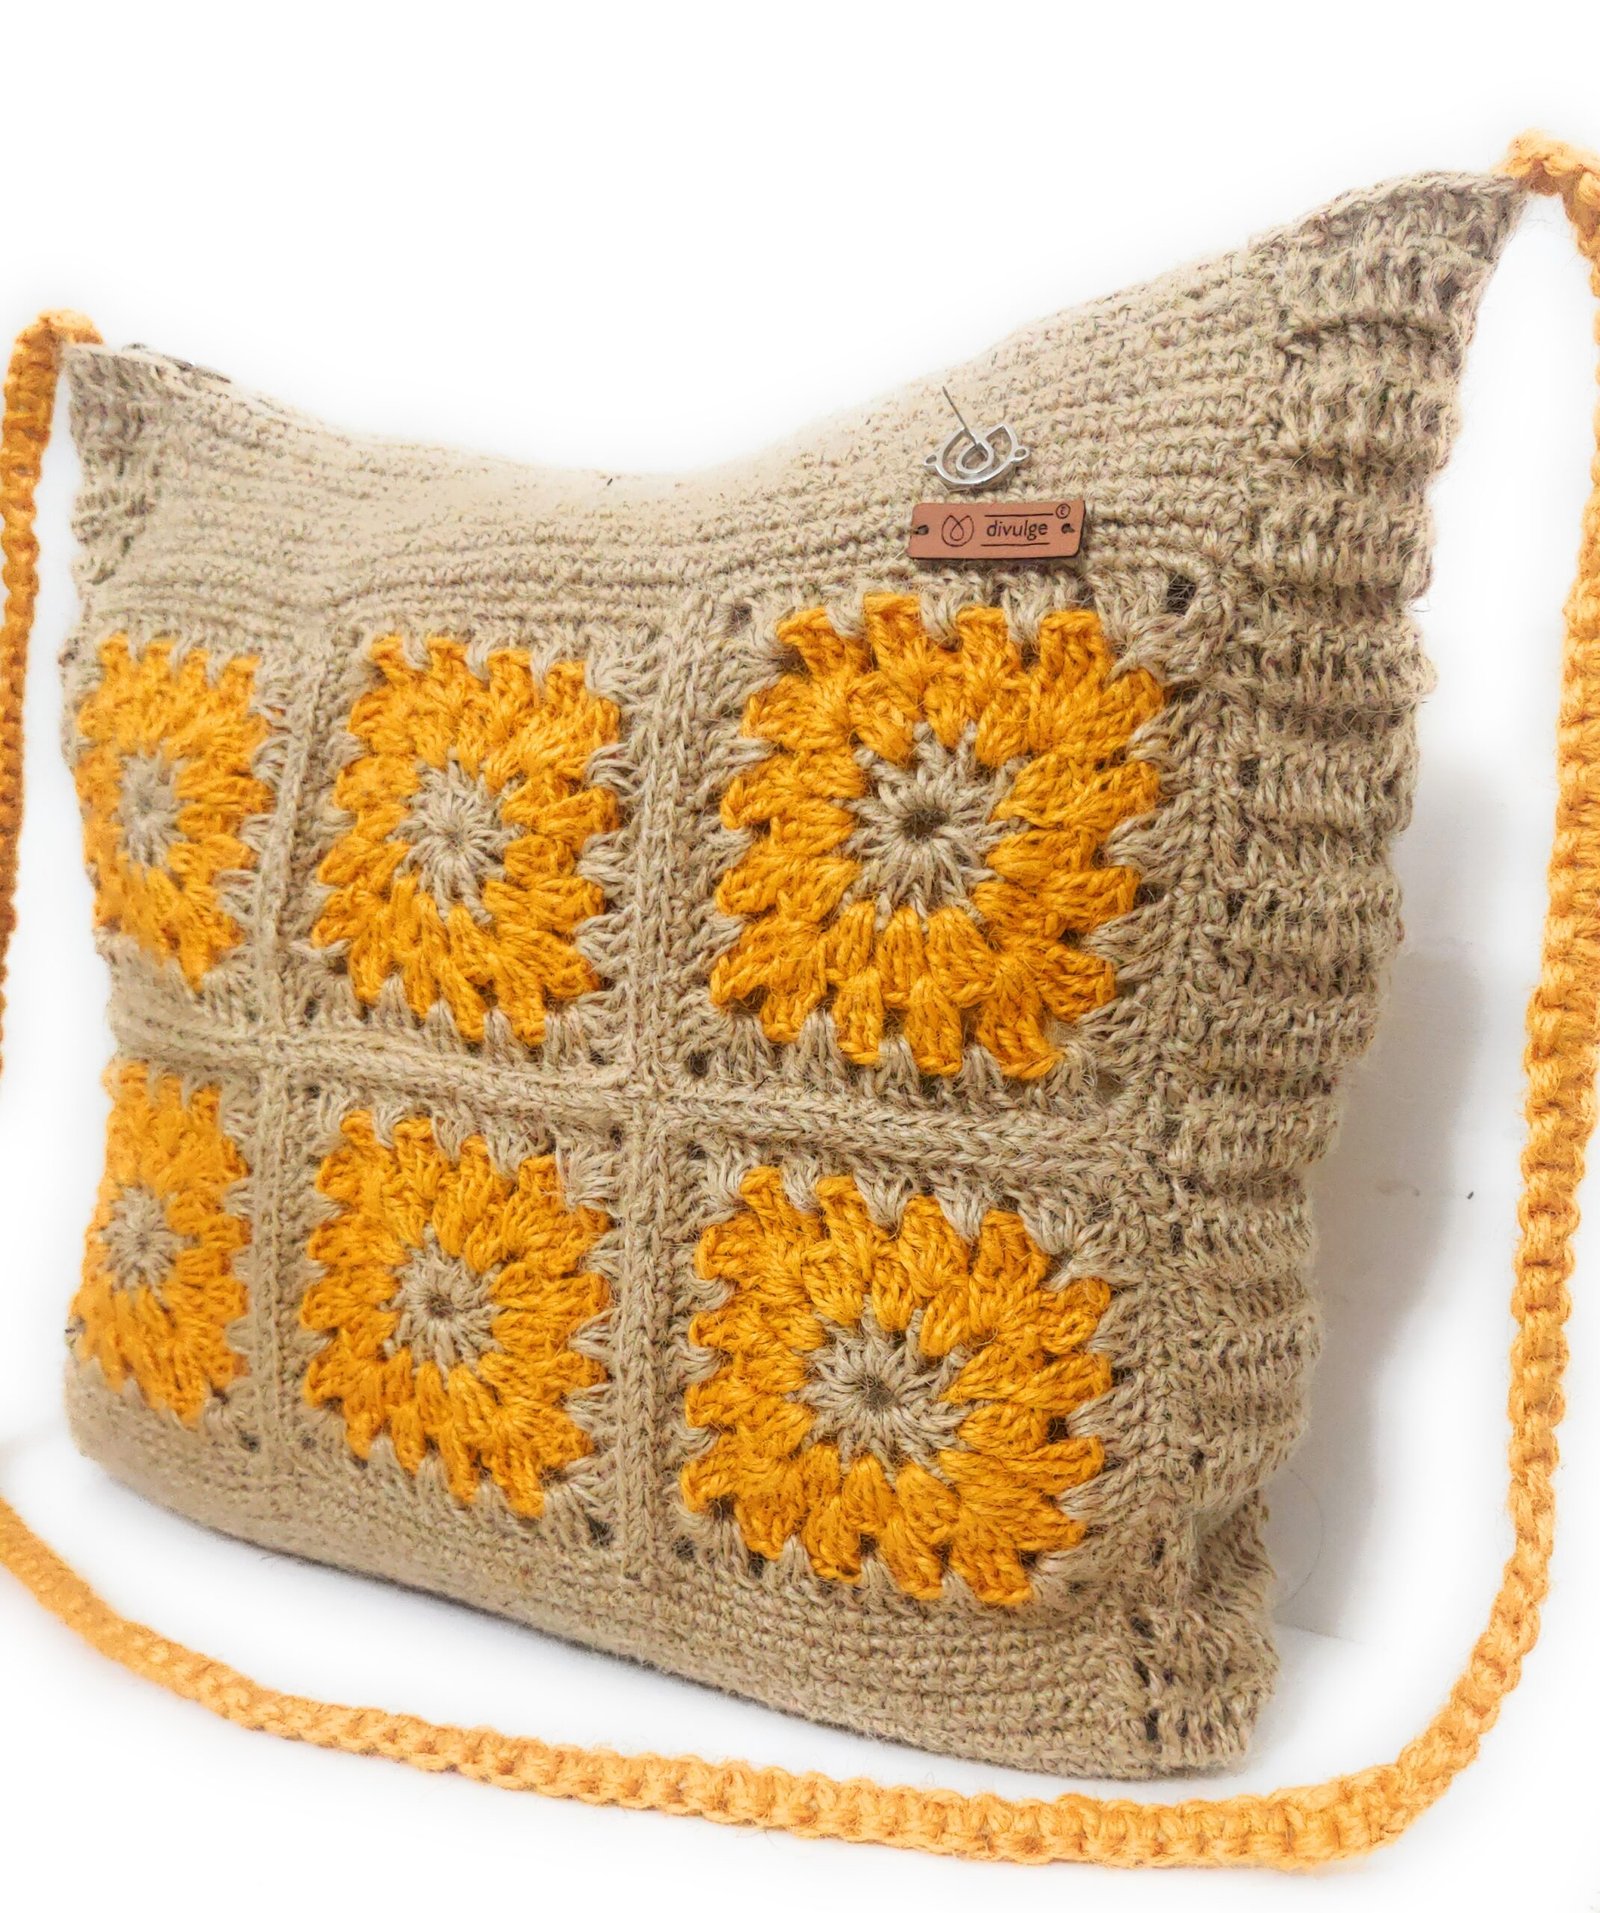 Divulge Instagram Crochet Bags